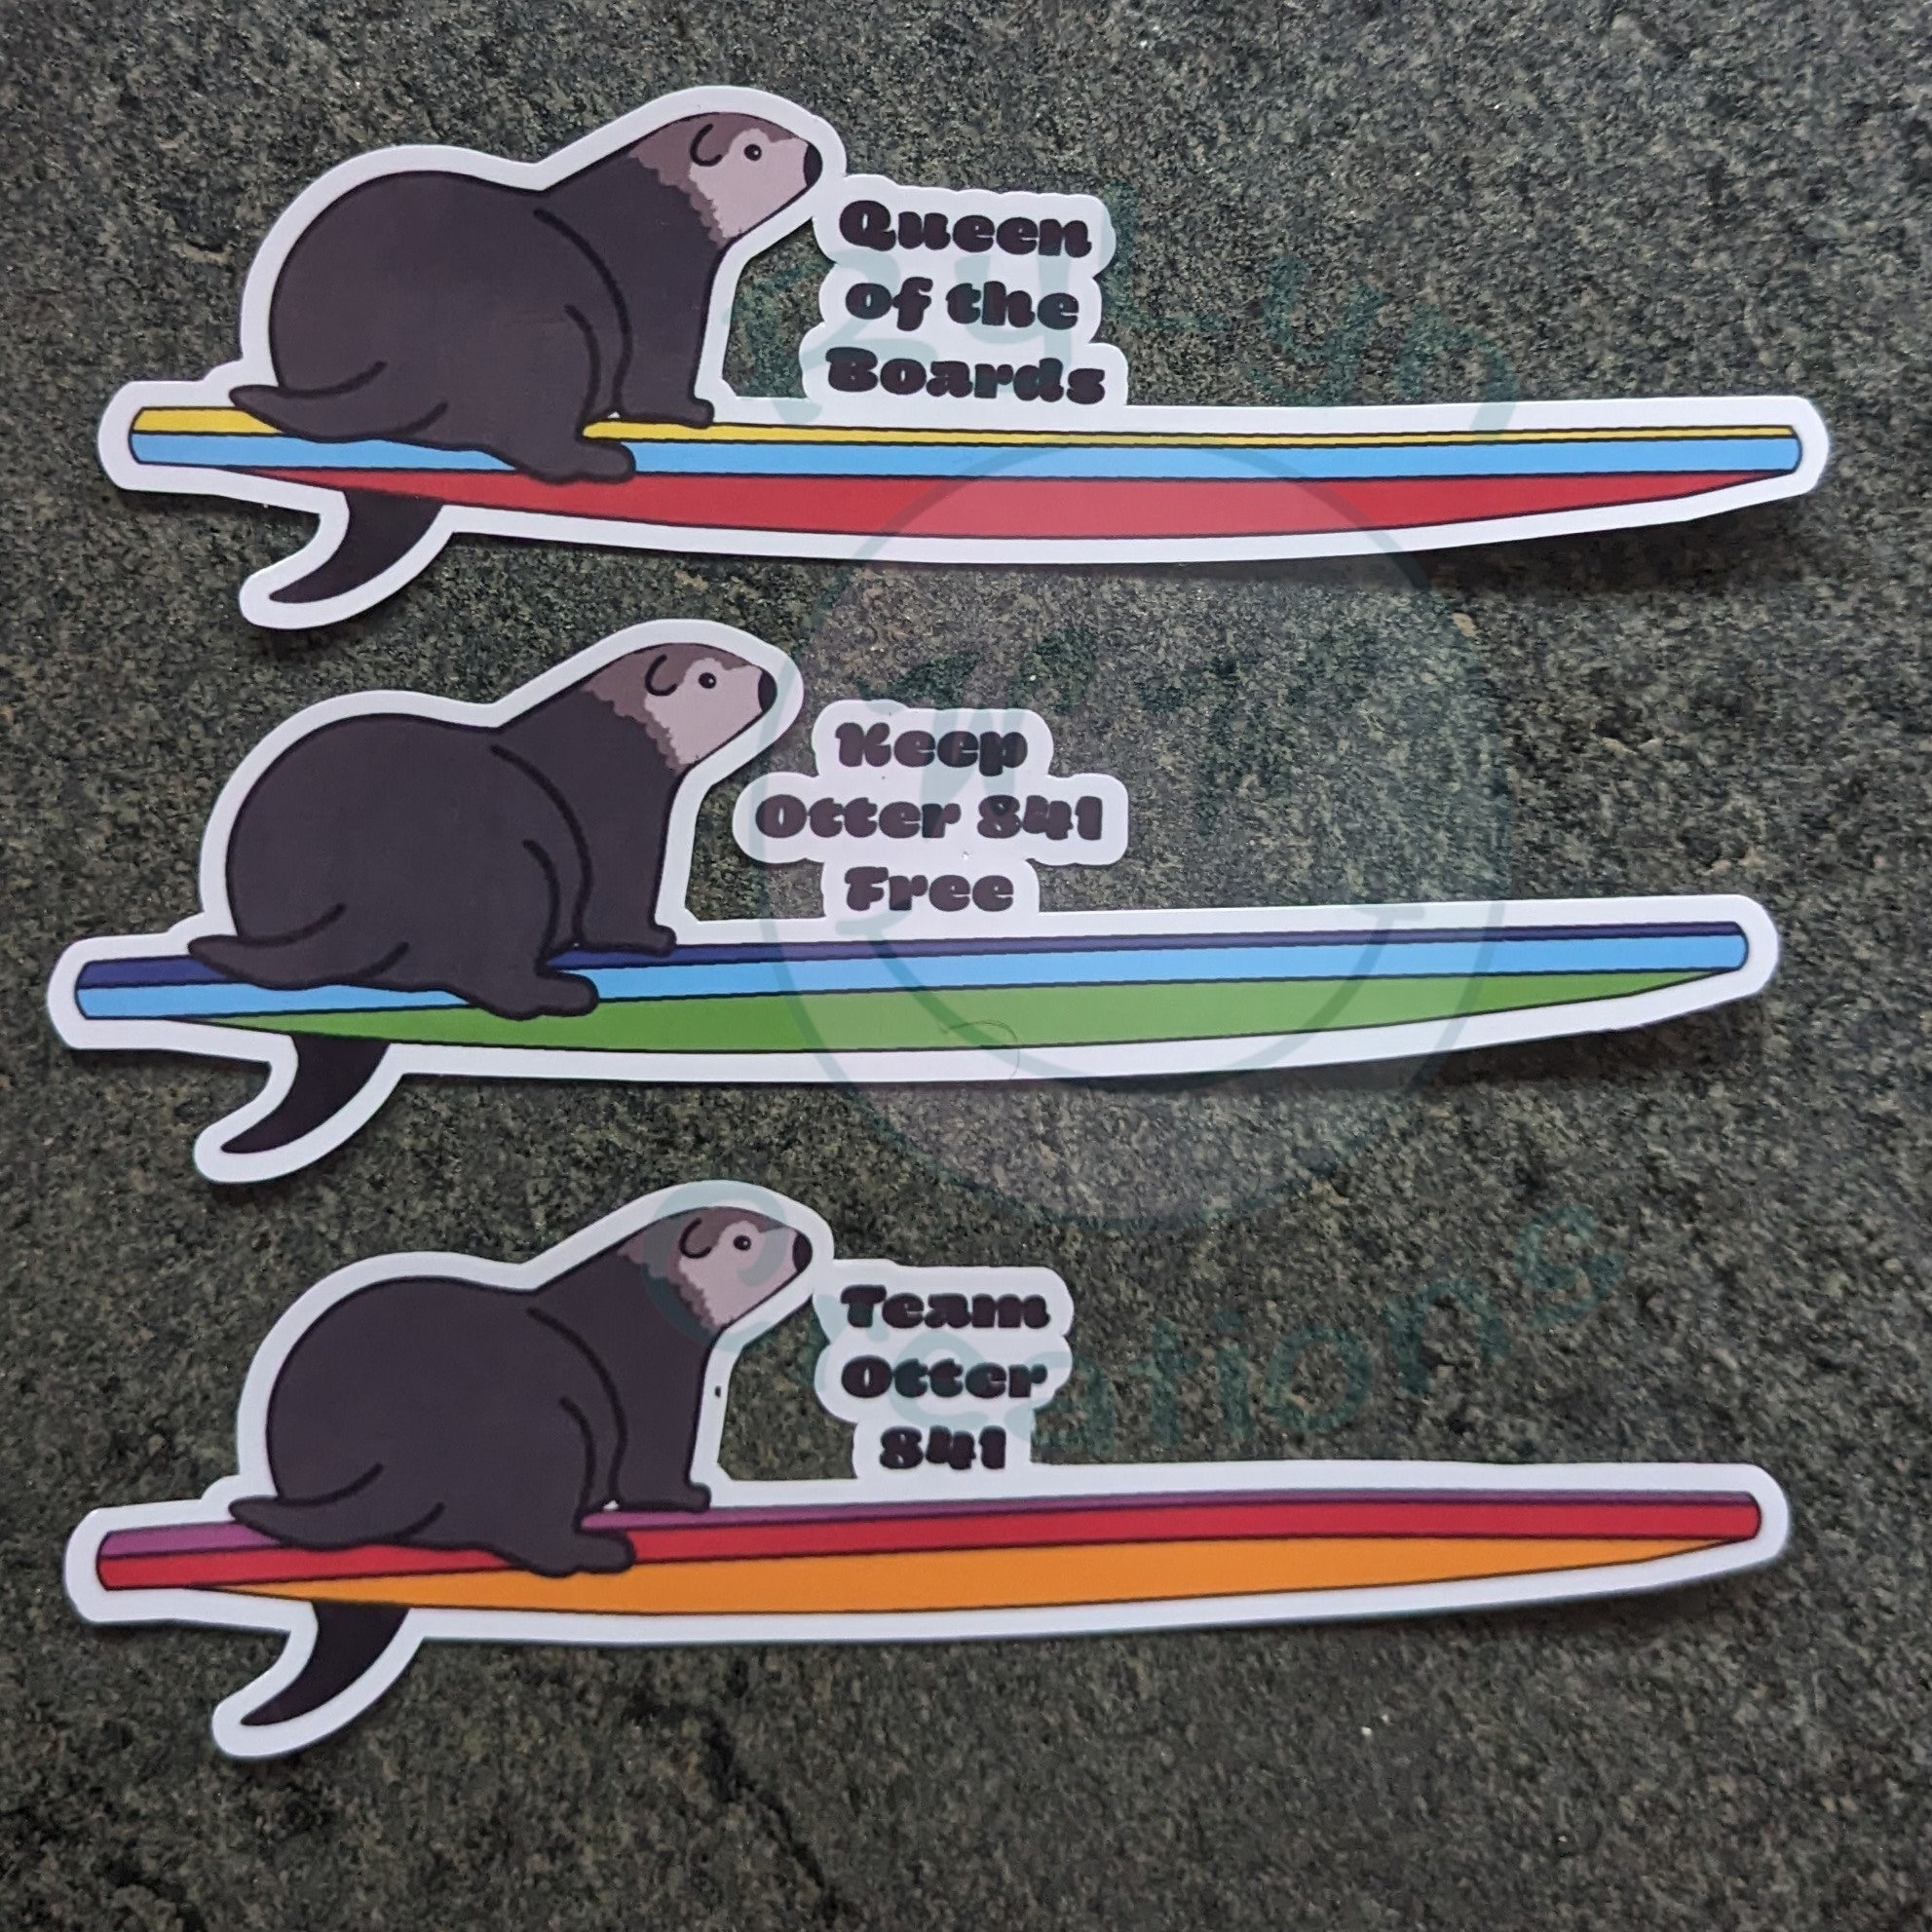 Otter Space Space Marder gift Sticker